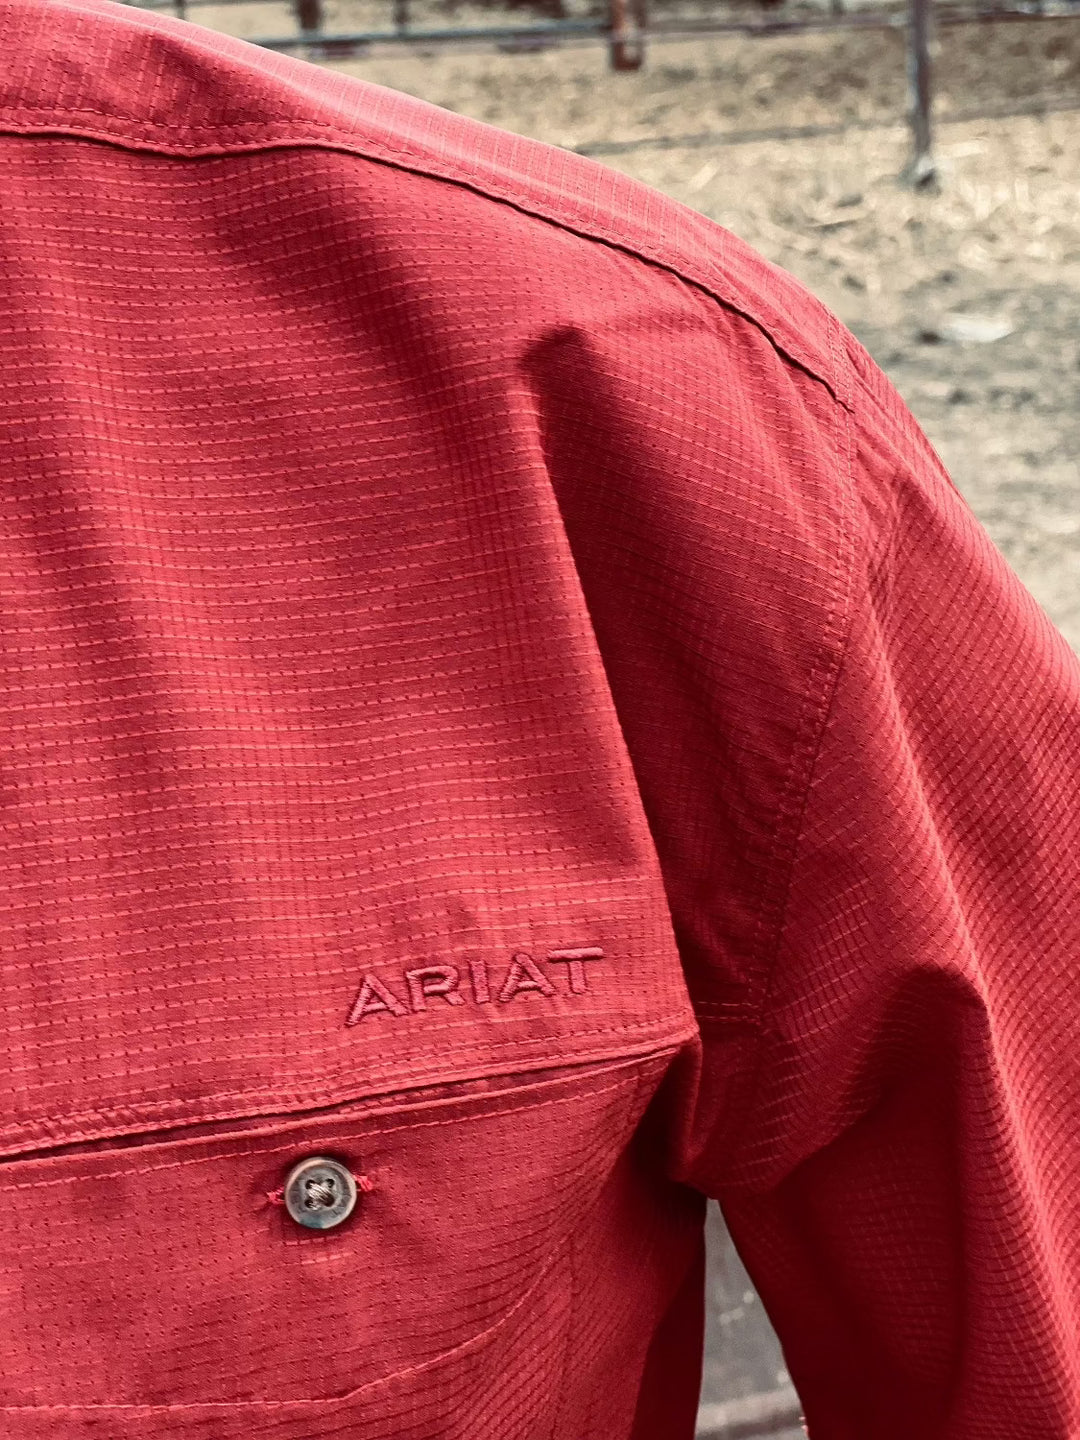 David Merlot Airflow Classic Fit Shirt by Ariat